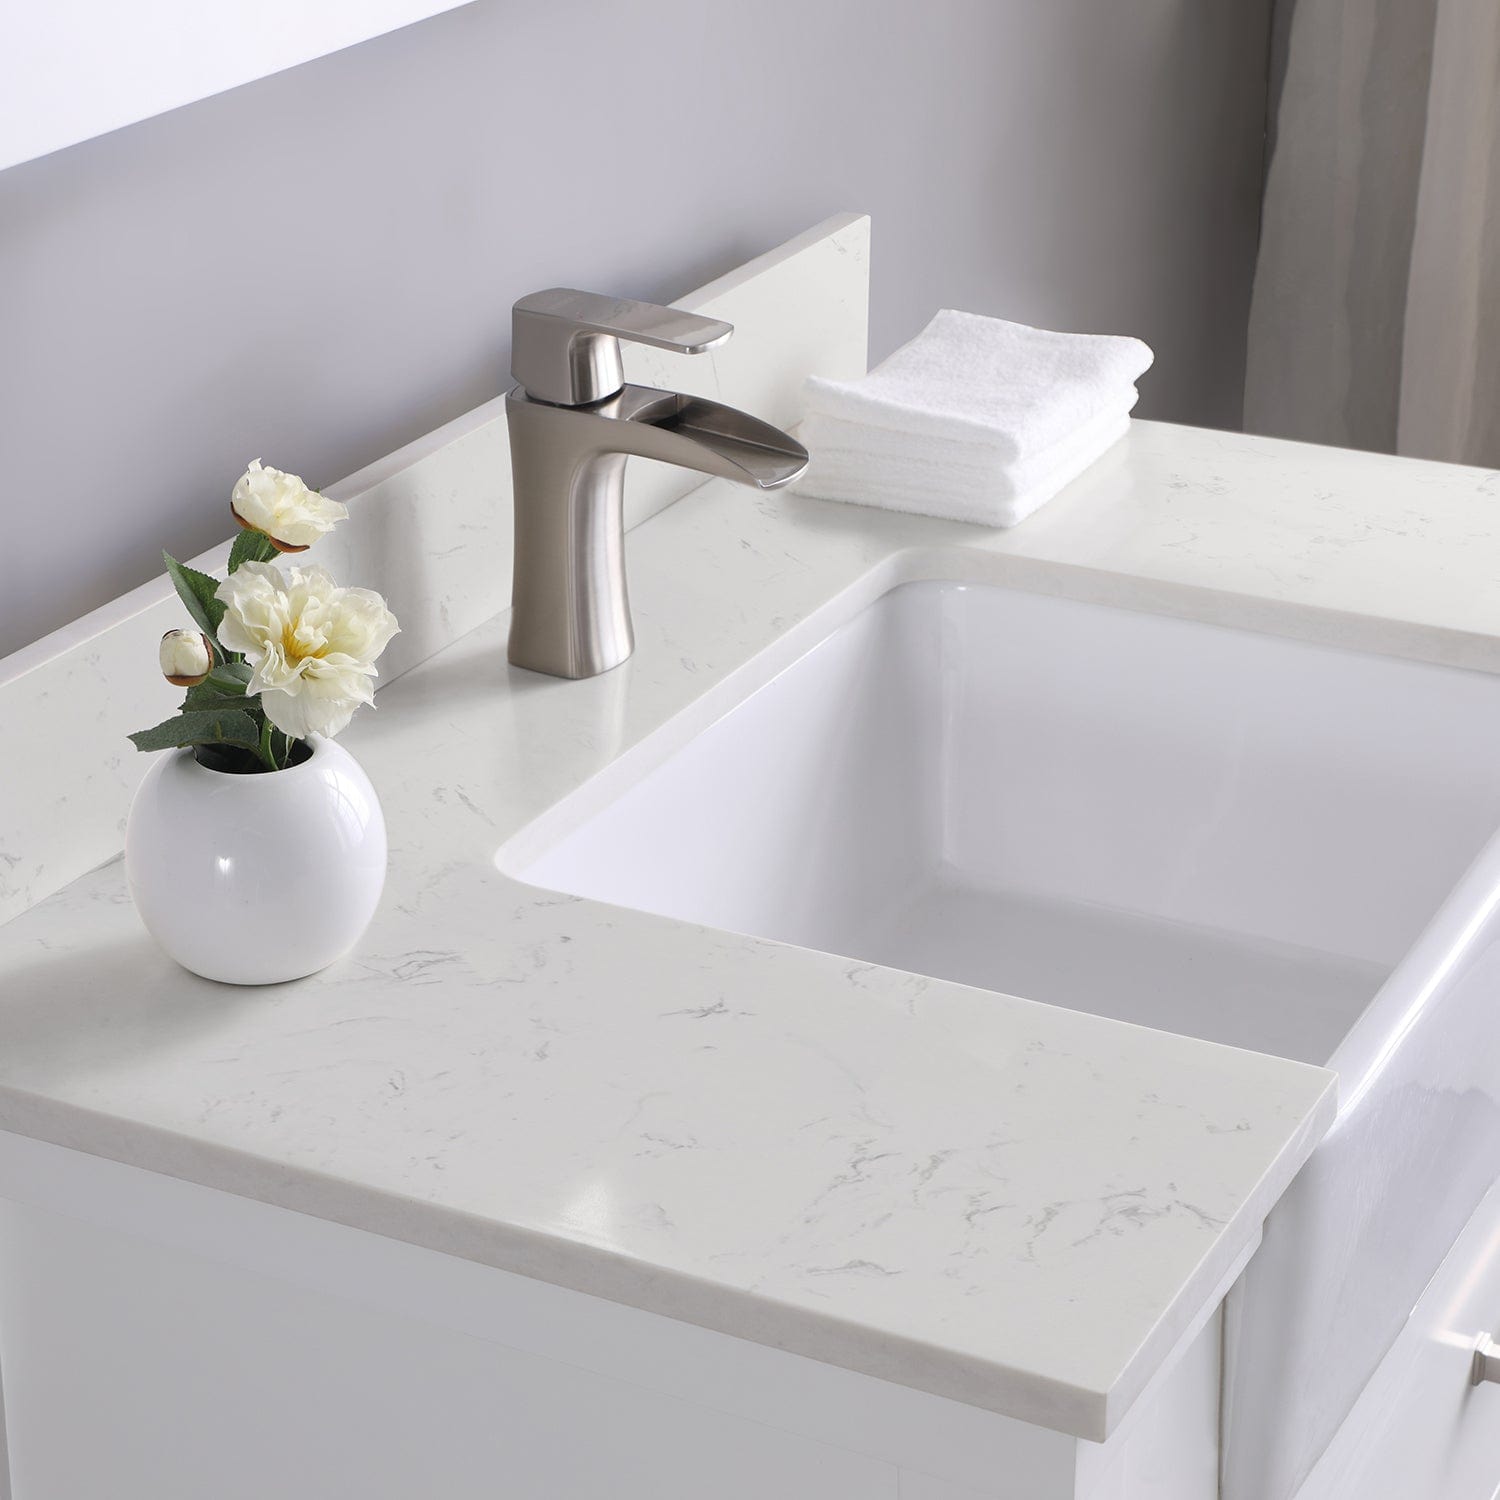 Altair Georgia 36" Single Bathroom Vanity Set in White and Composite Carrara White Stone Top with White Farmhouse Basin with Mirror 537036-WH-AW - Molaix631112970570Vanity537036-WH-AW